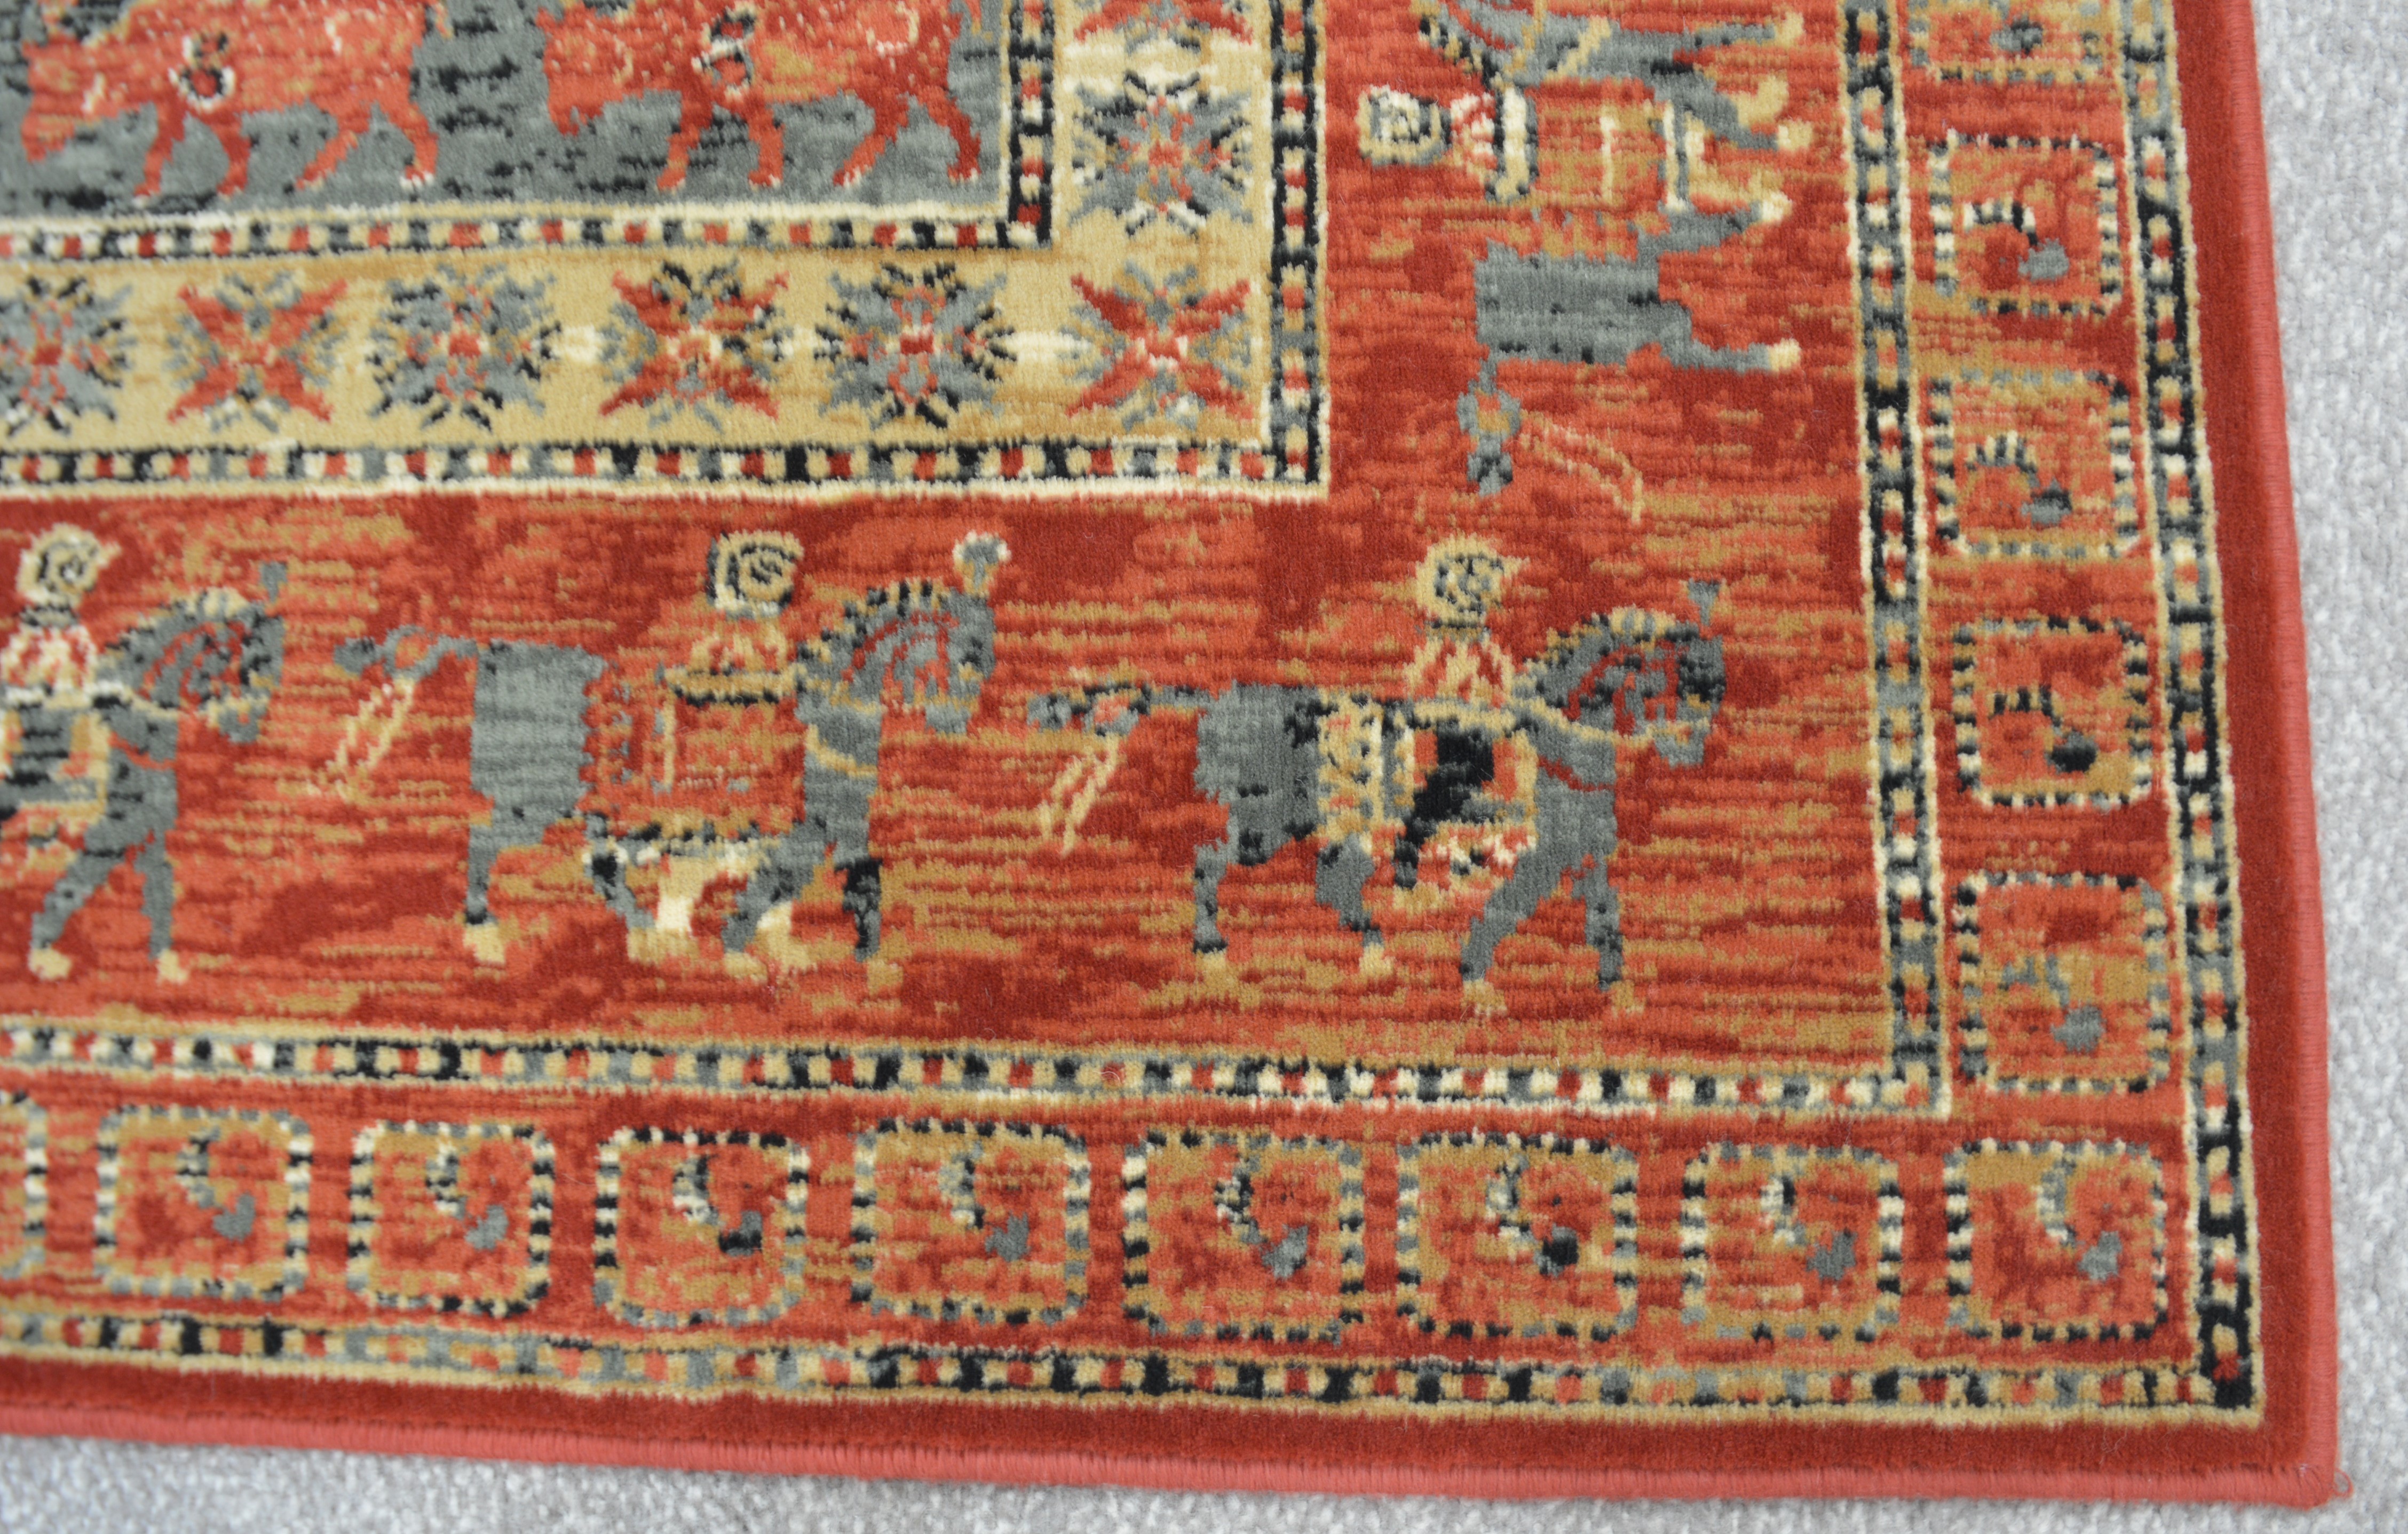 Gooch Oriental Carpets New Zealand Merino wool Woburn Collection carpet, 160cm x 230cm - Image 3 of 4